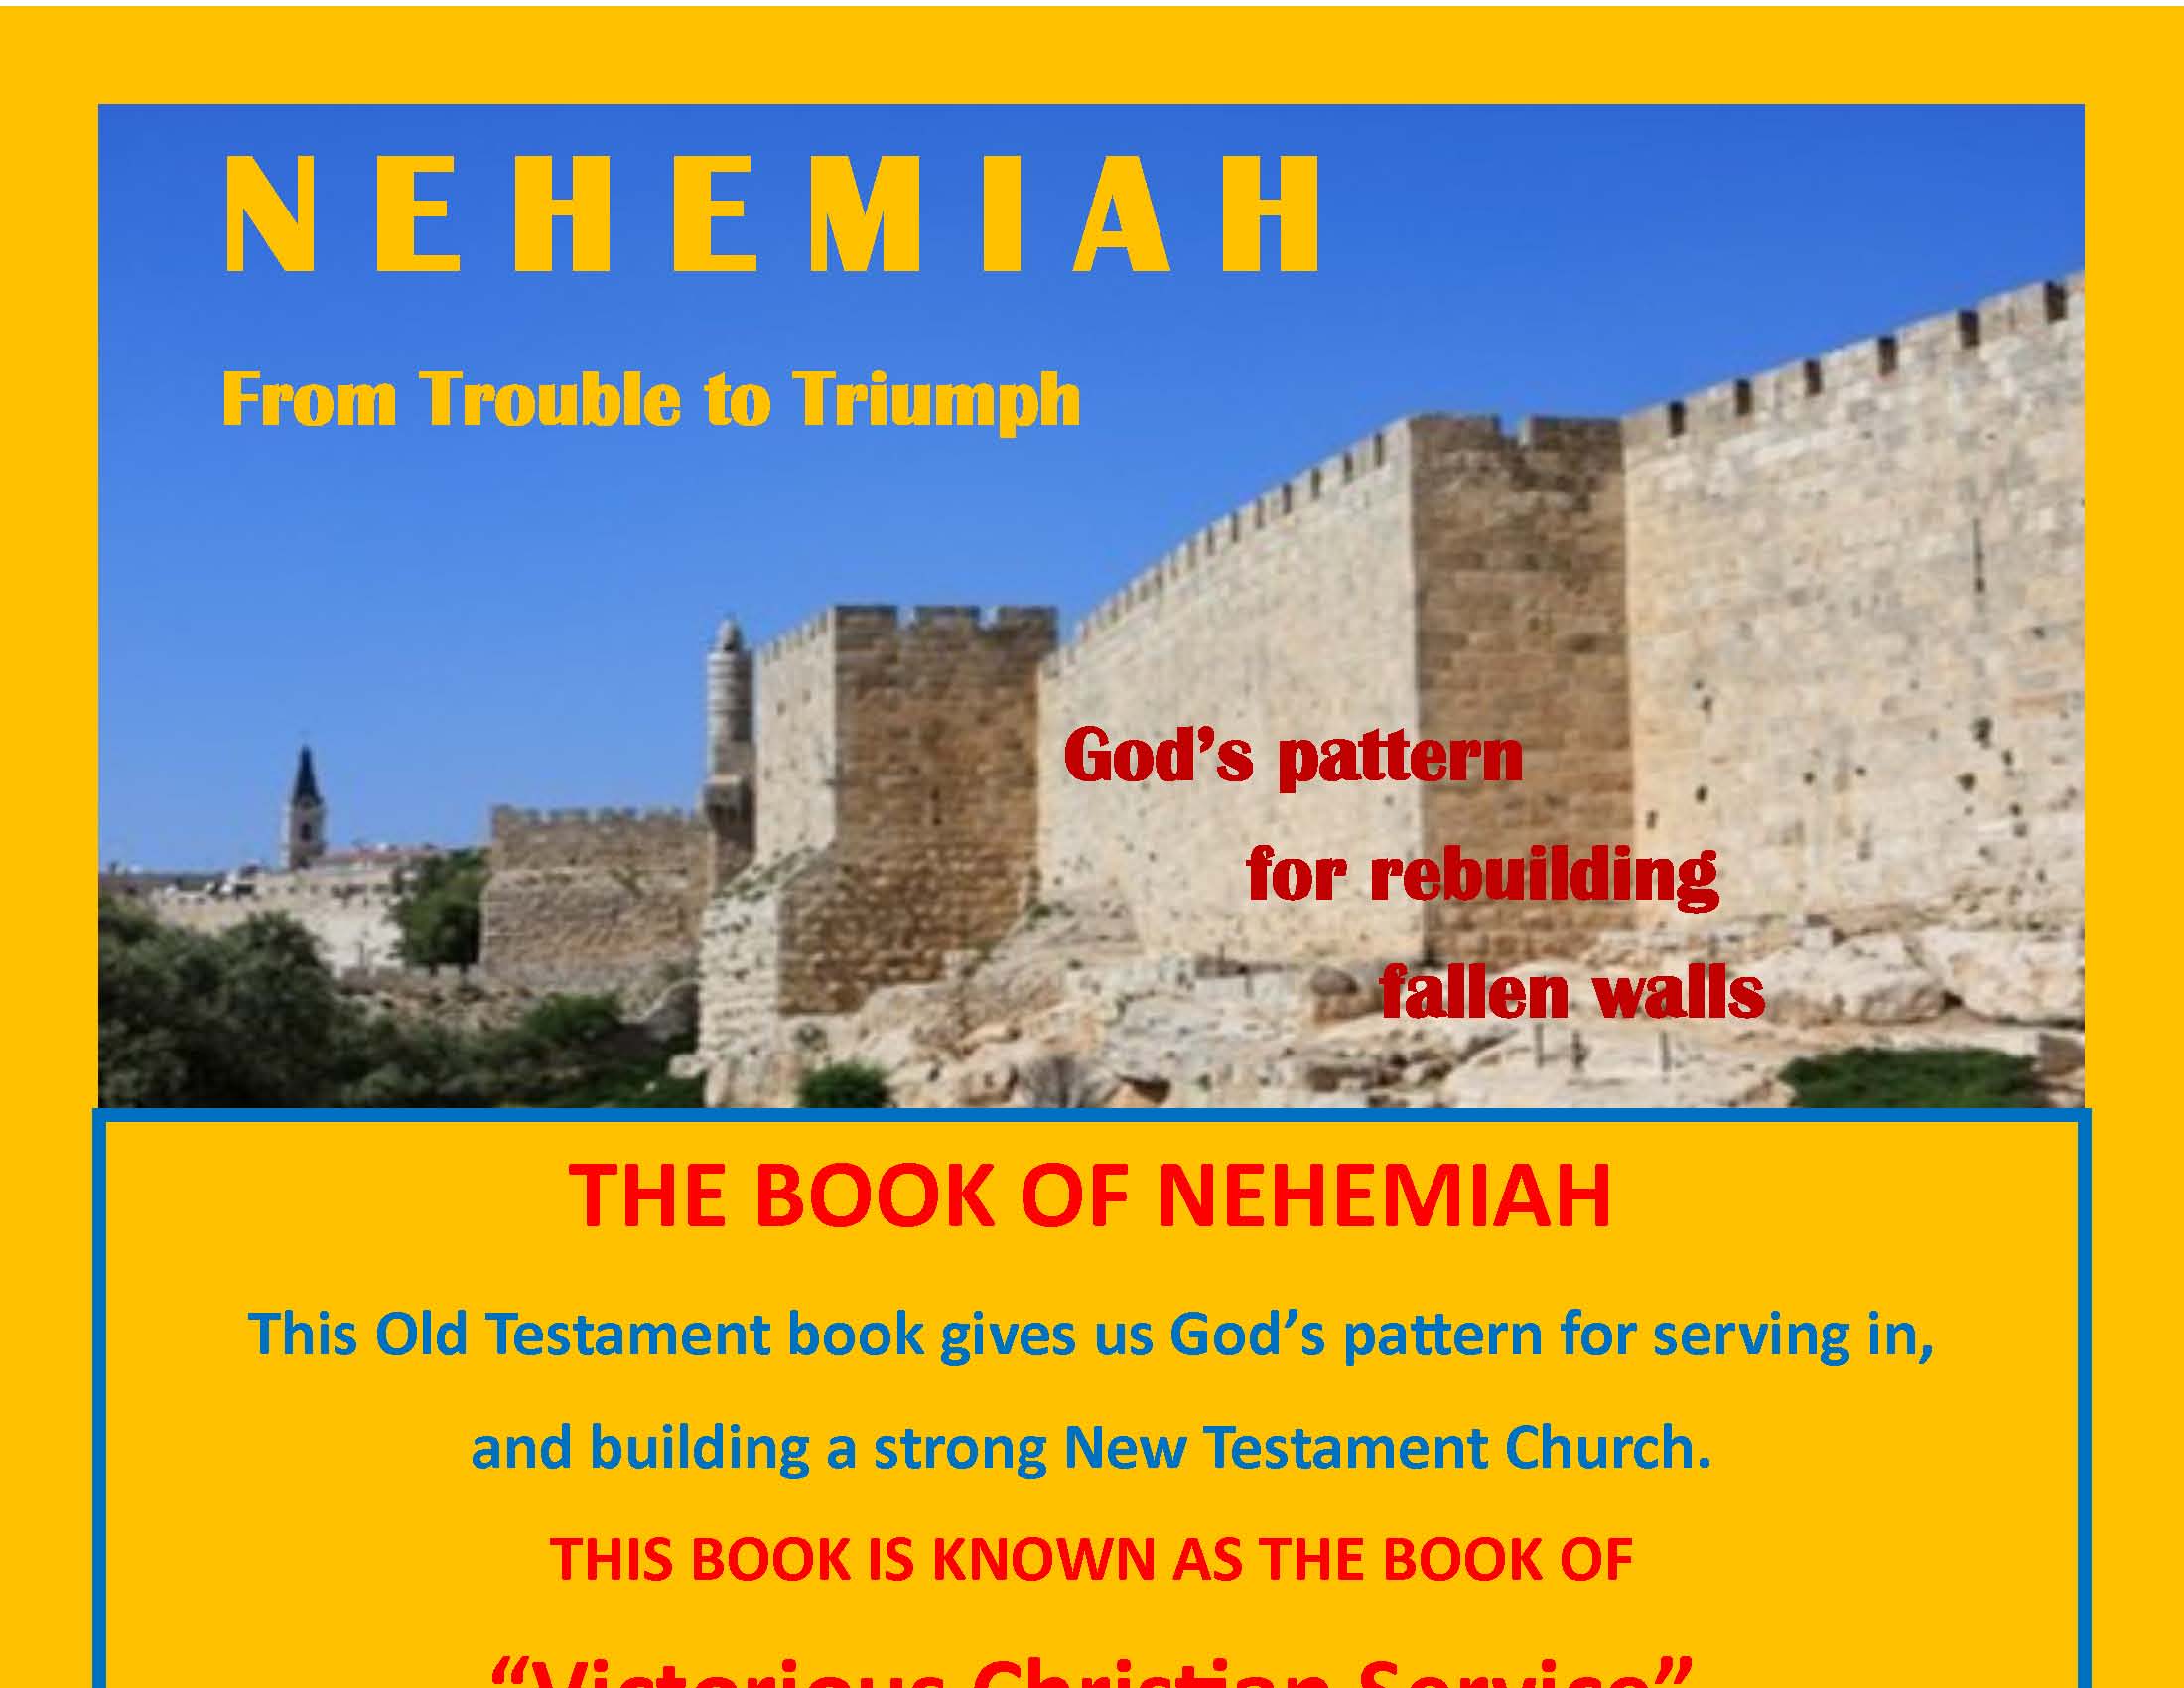 NEHEMIAH LANDSCAPE